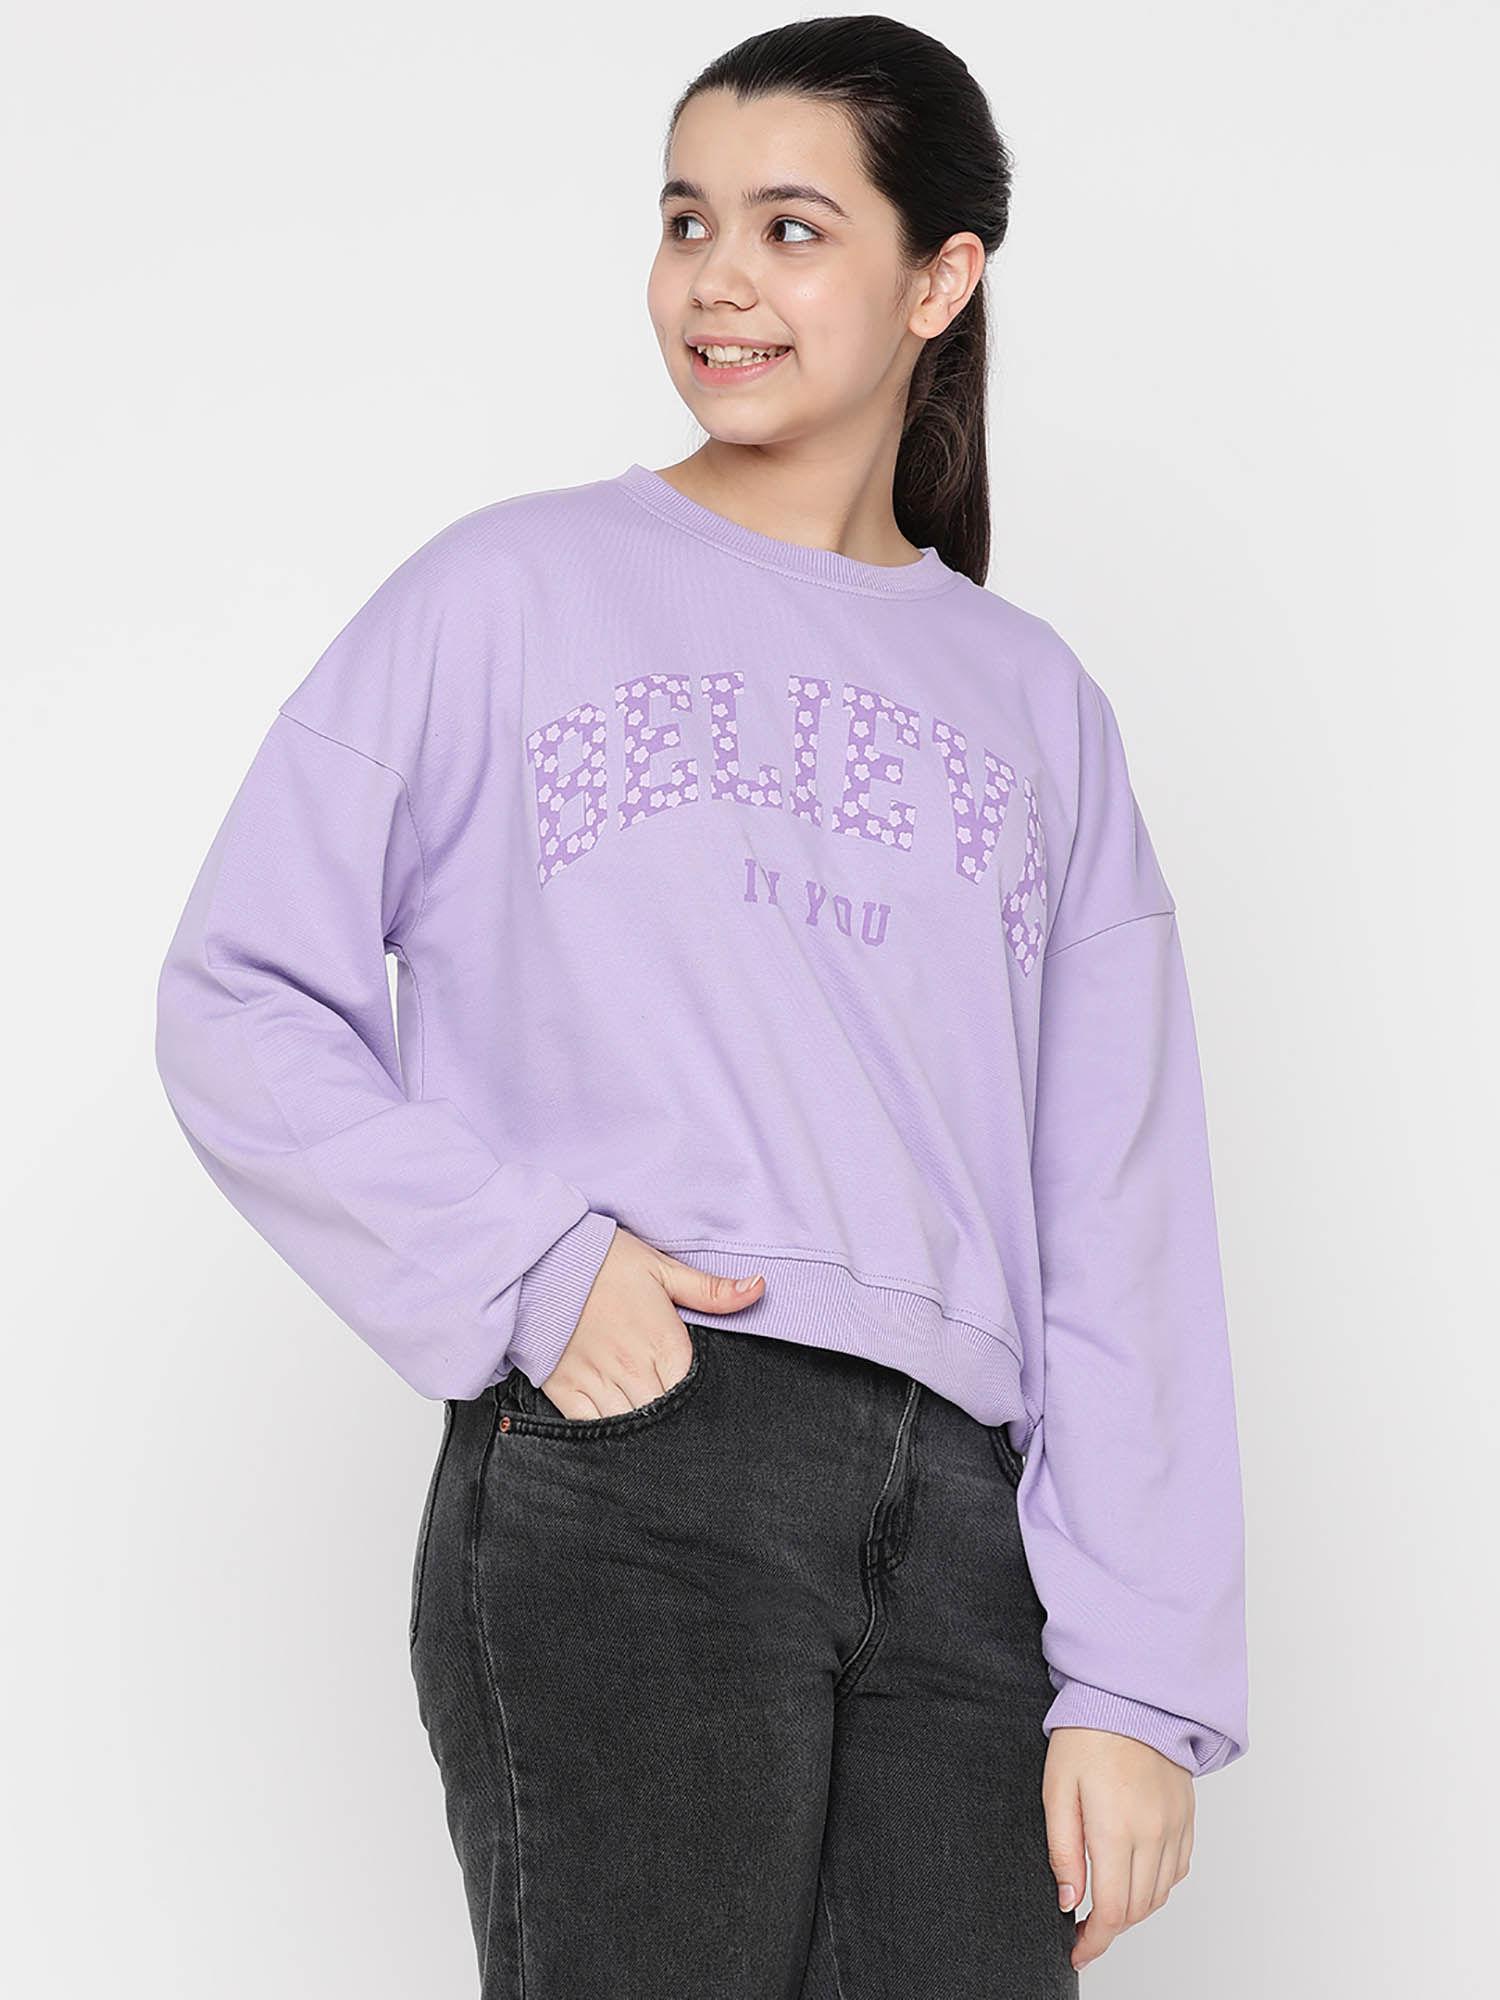 girls typography light weight cotton looper sweatshirt-purple